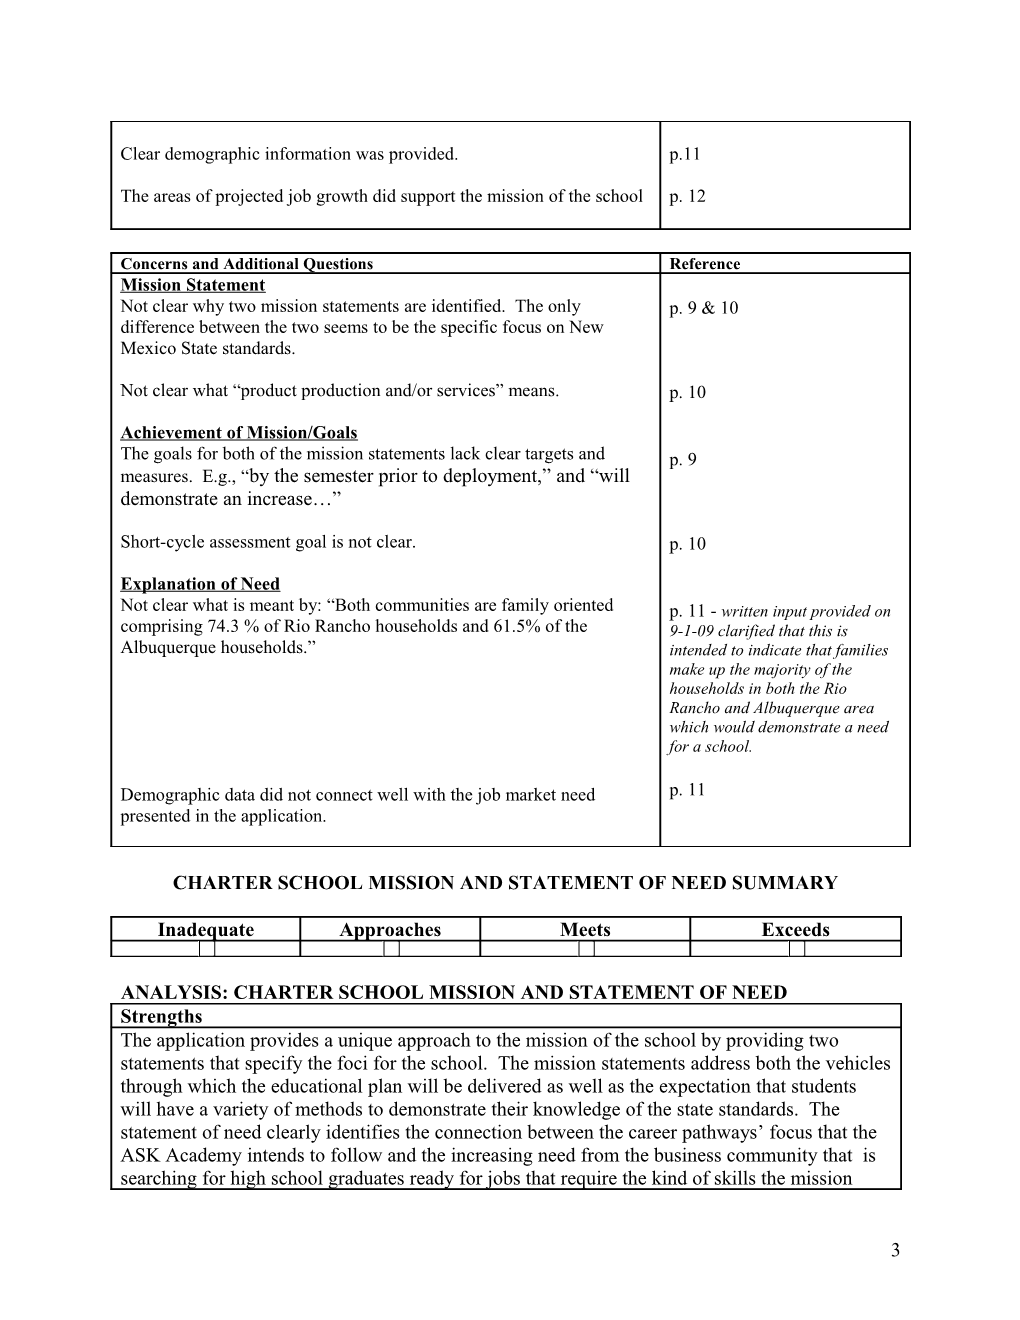 2009 Charterschool Application Final Evaluation